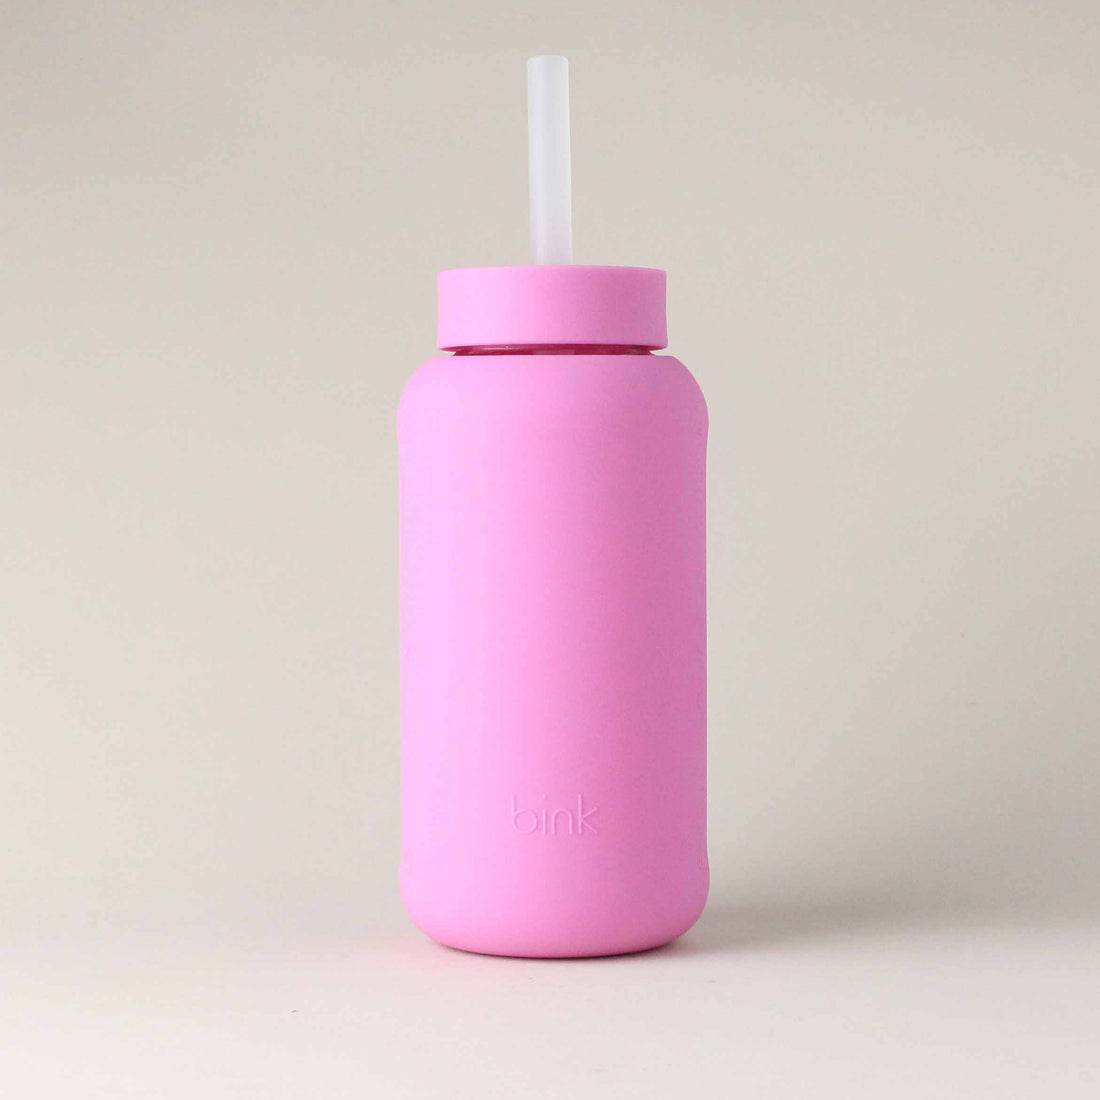 Bink Mama Hydration Tracking Water Bottle Bubblegum